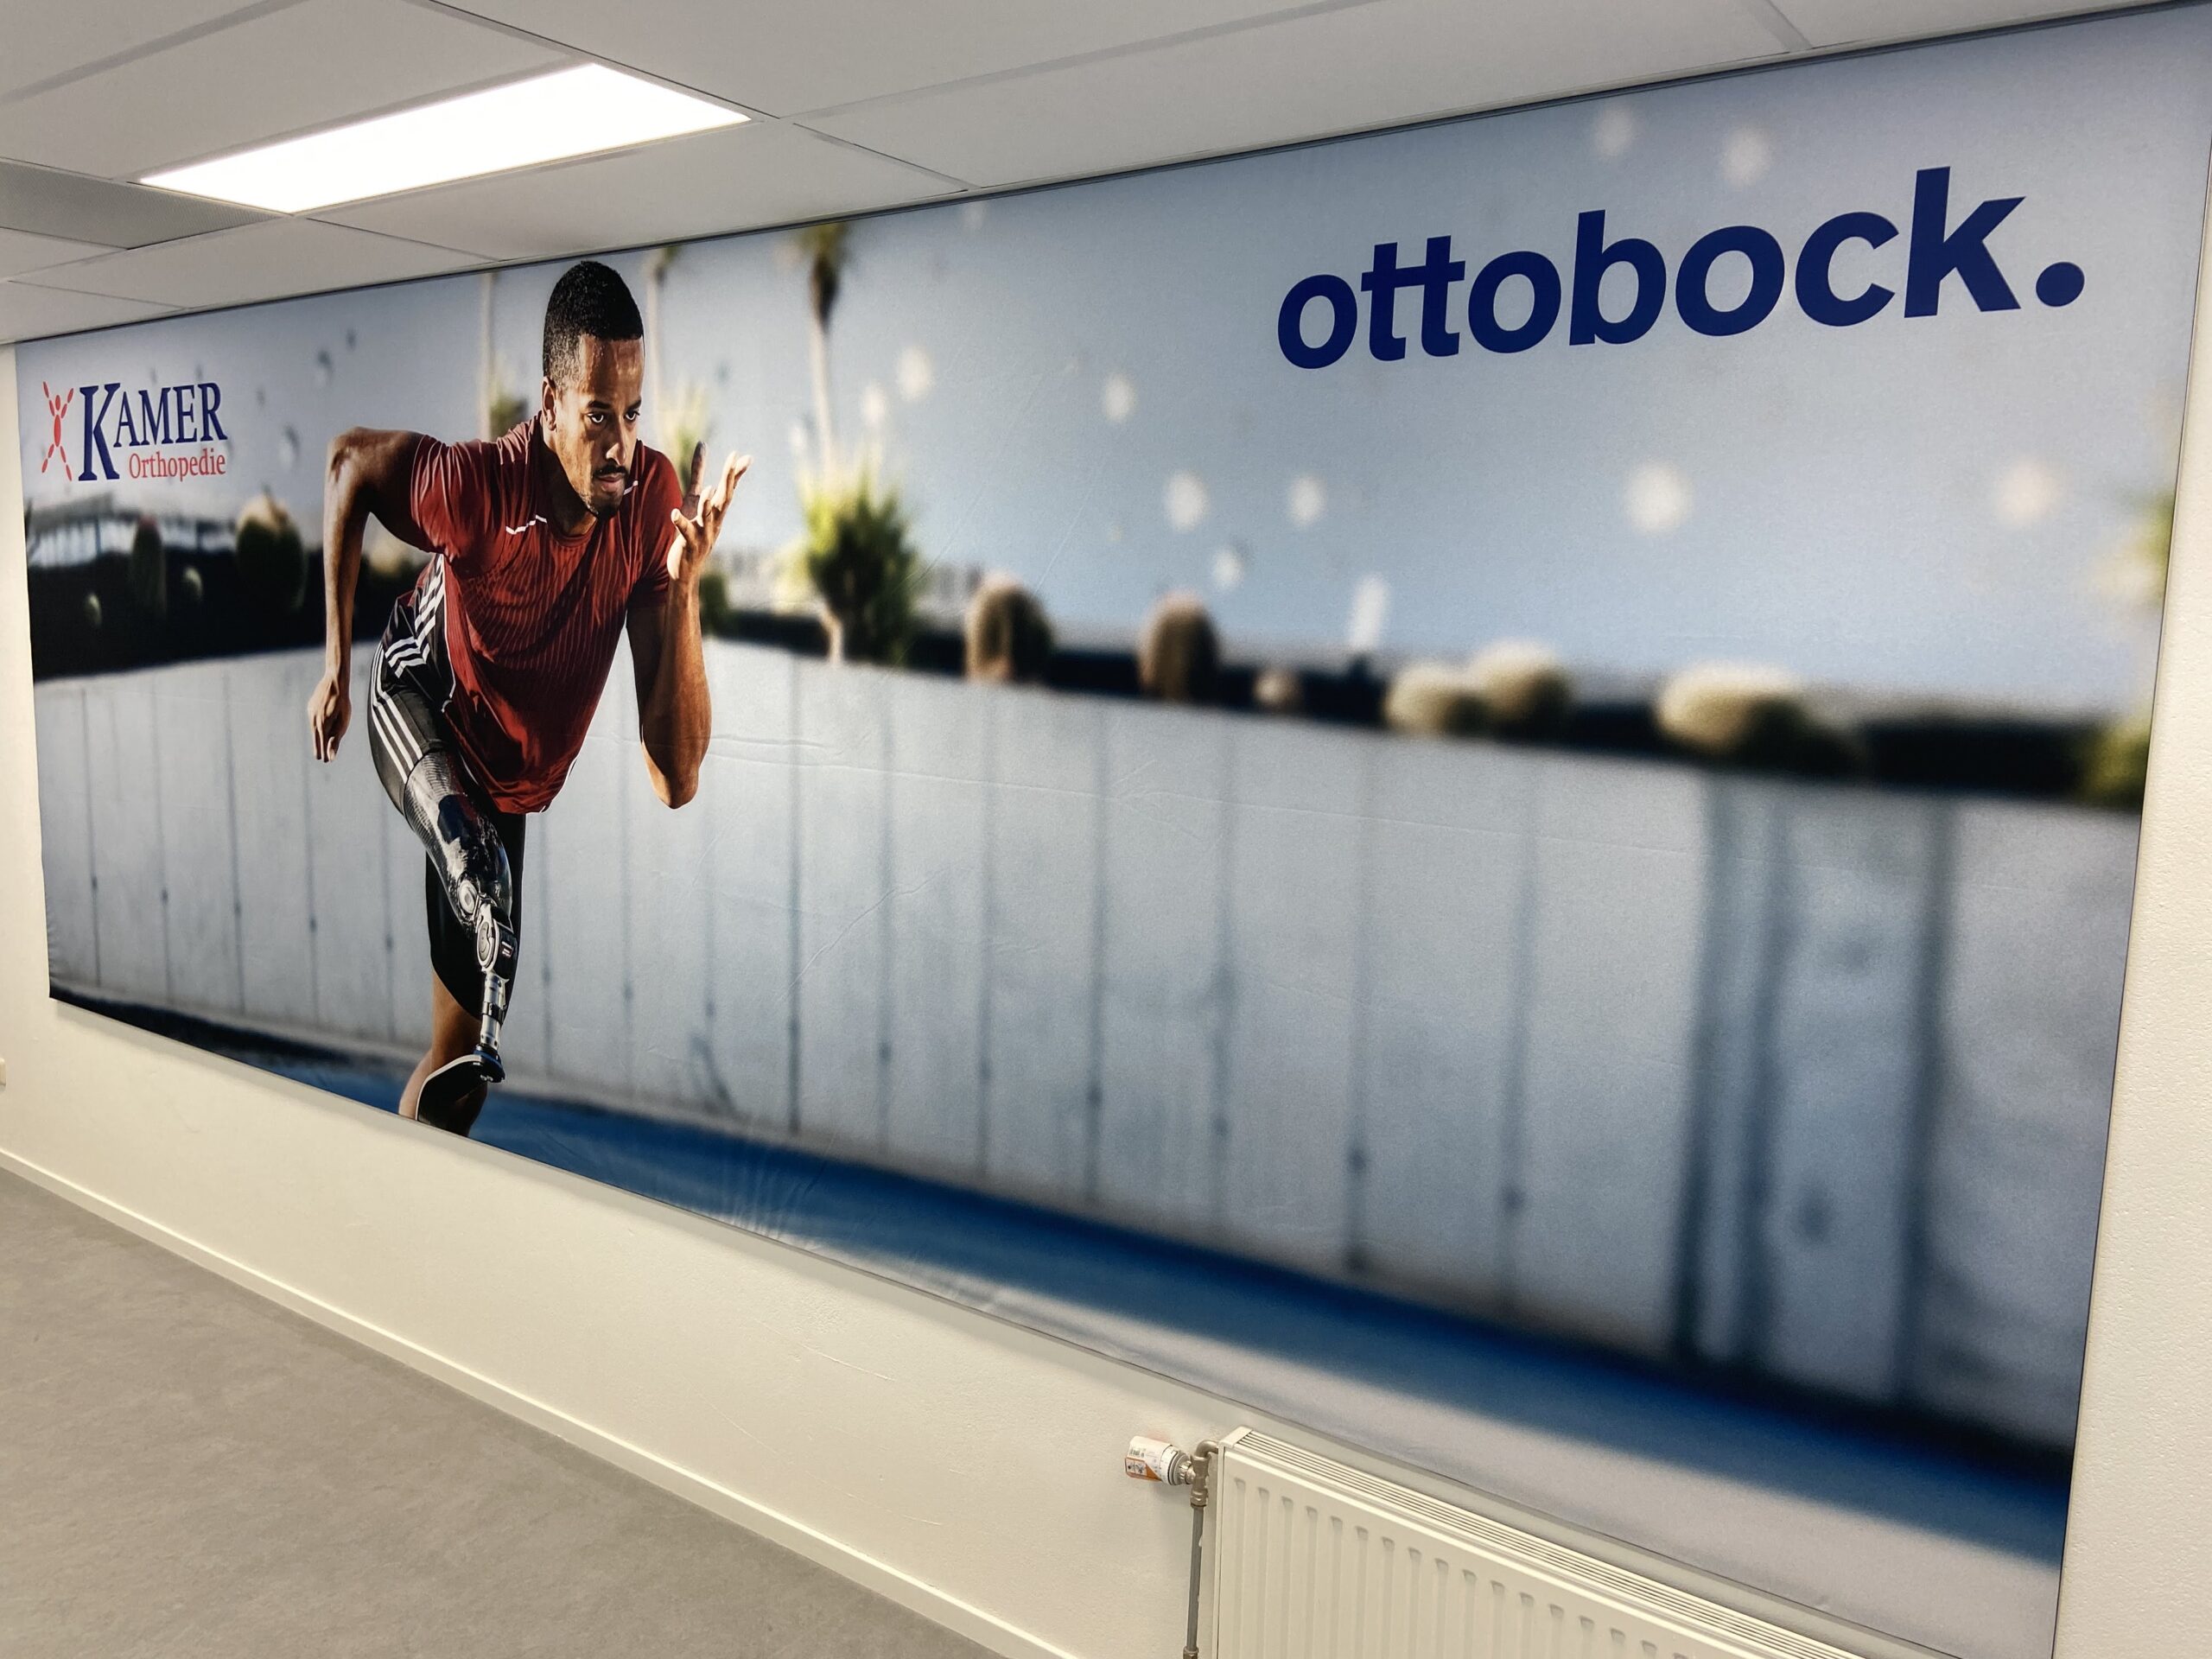 Project Ottobock